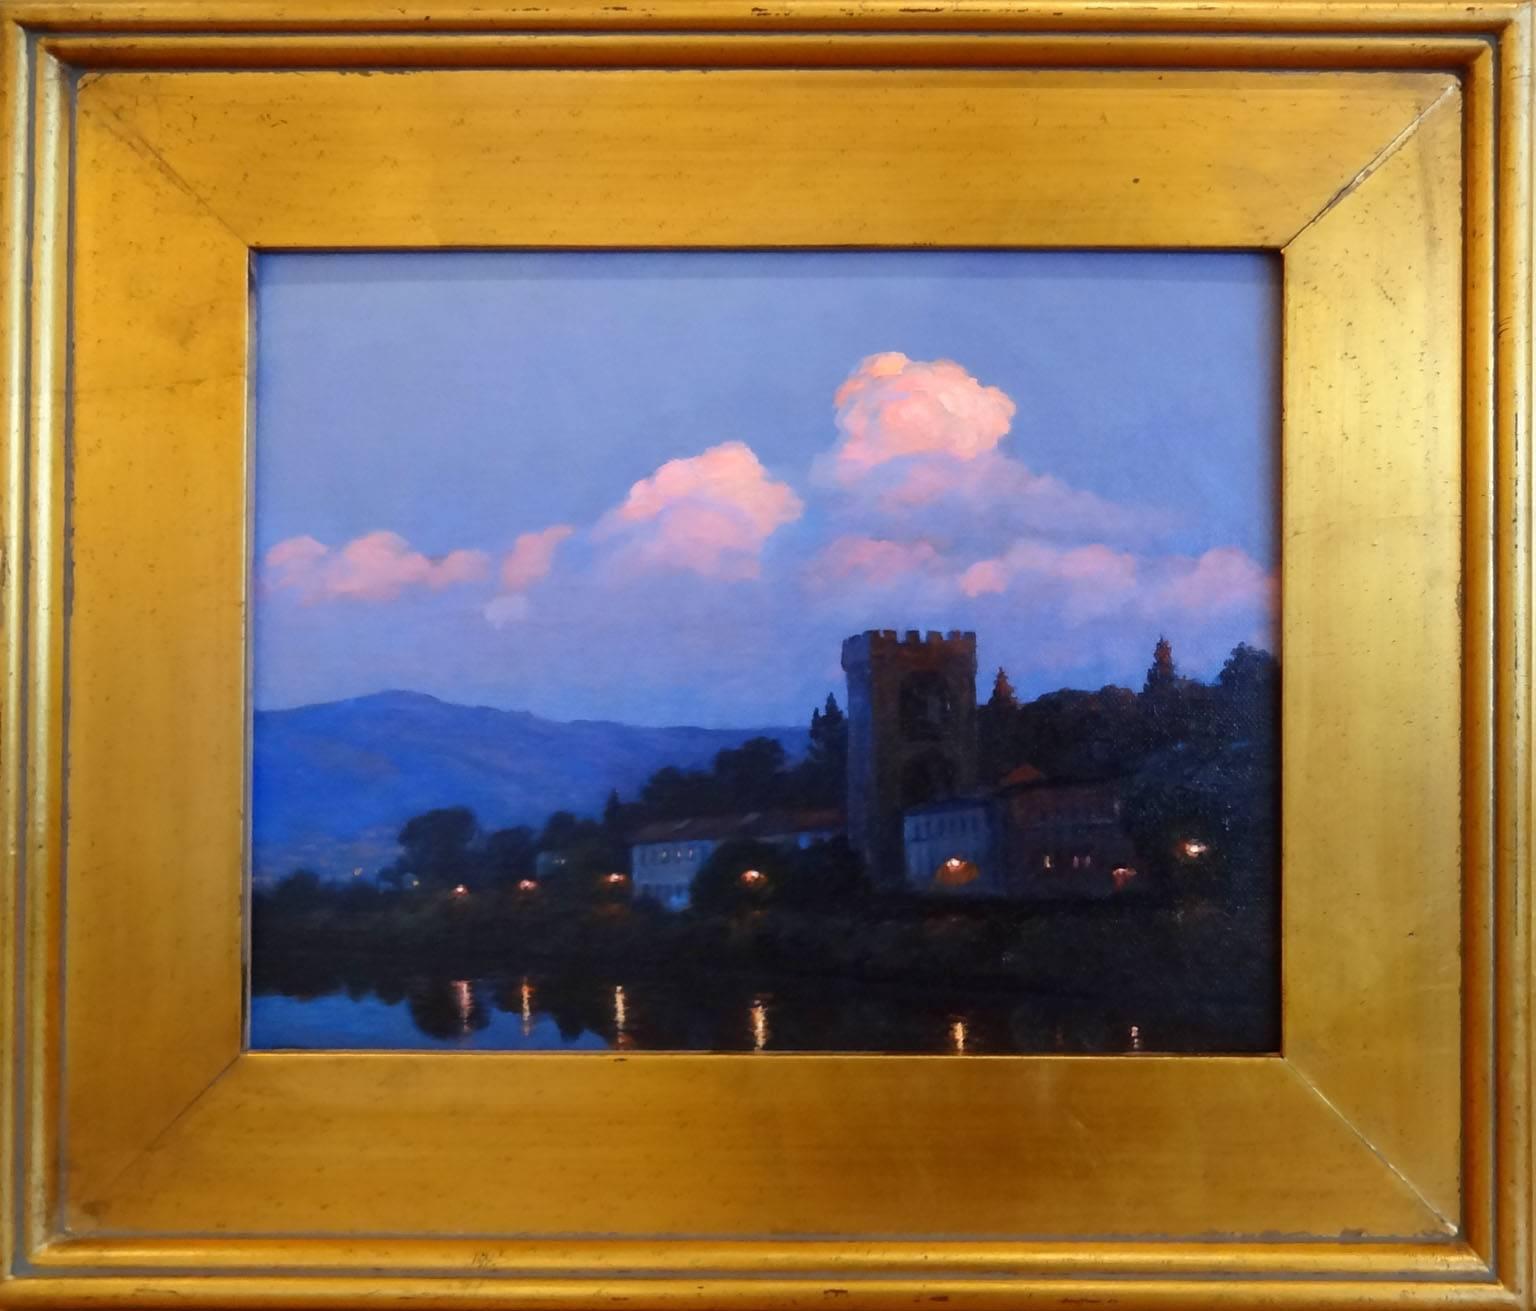 River Arno, Florence - Painting by Victoria Bondarenko